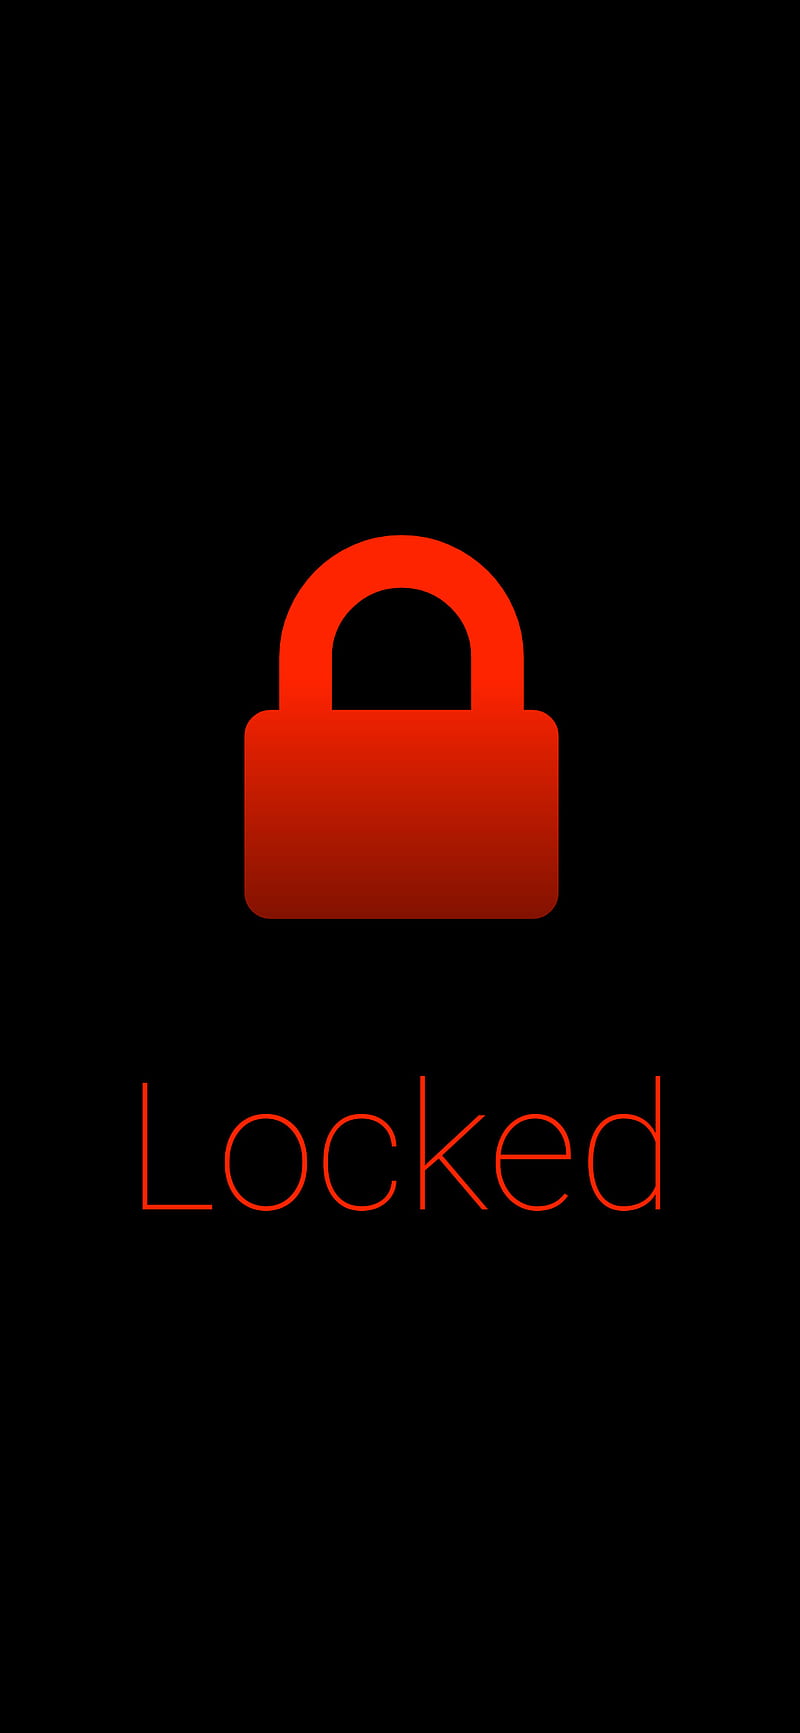 Locked!